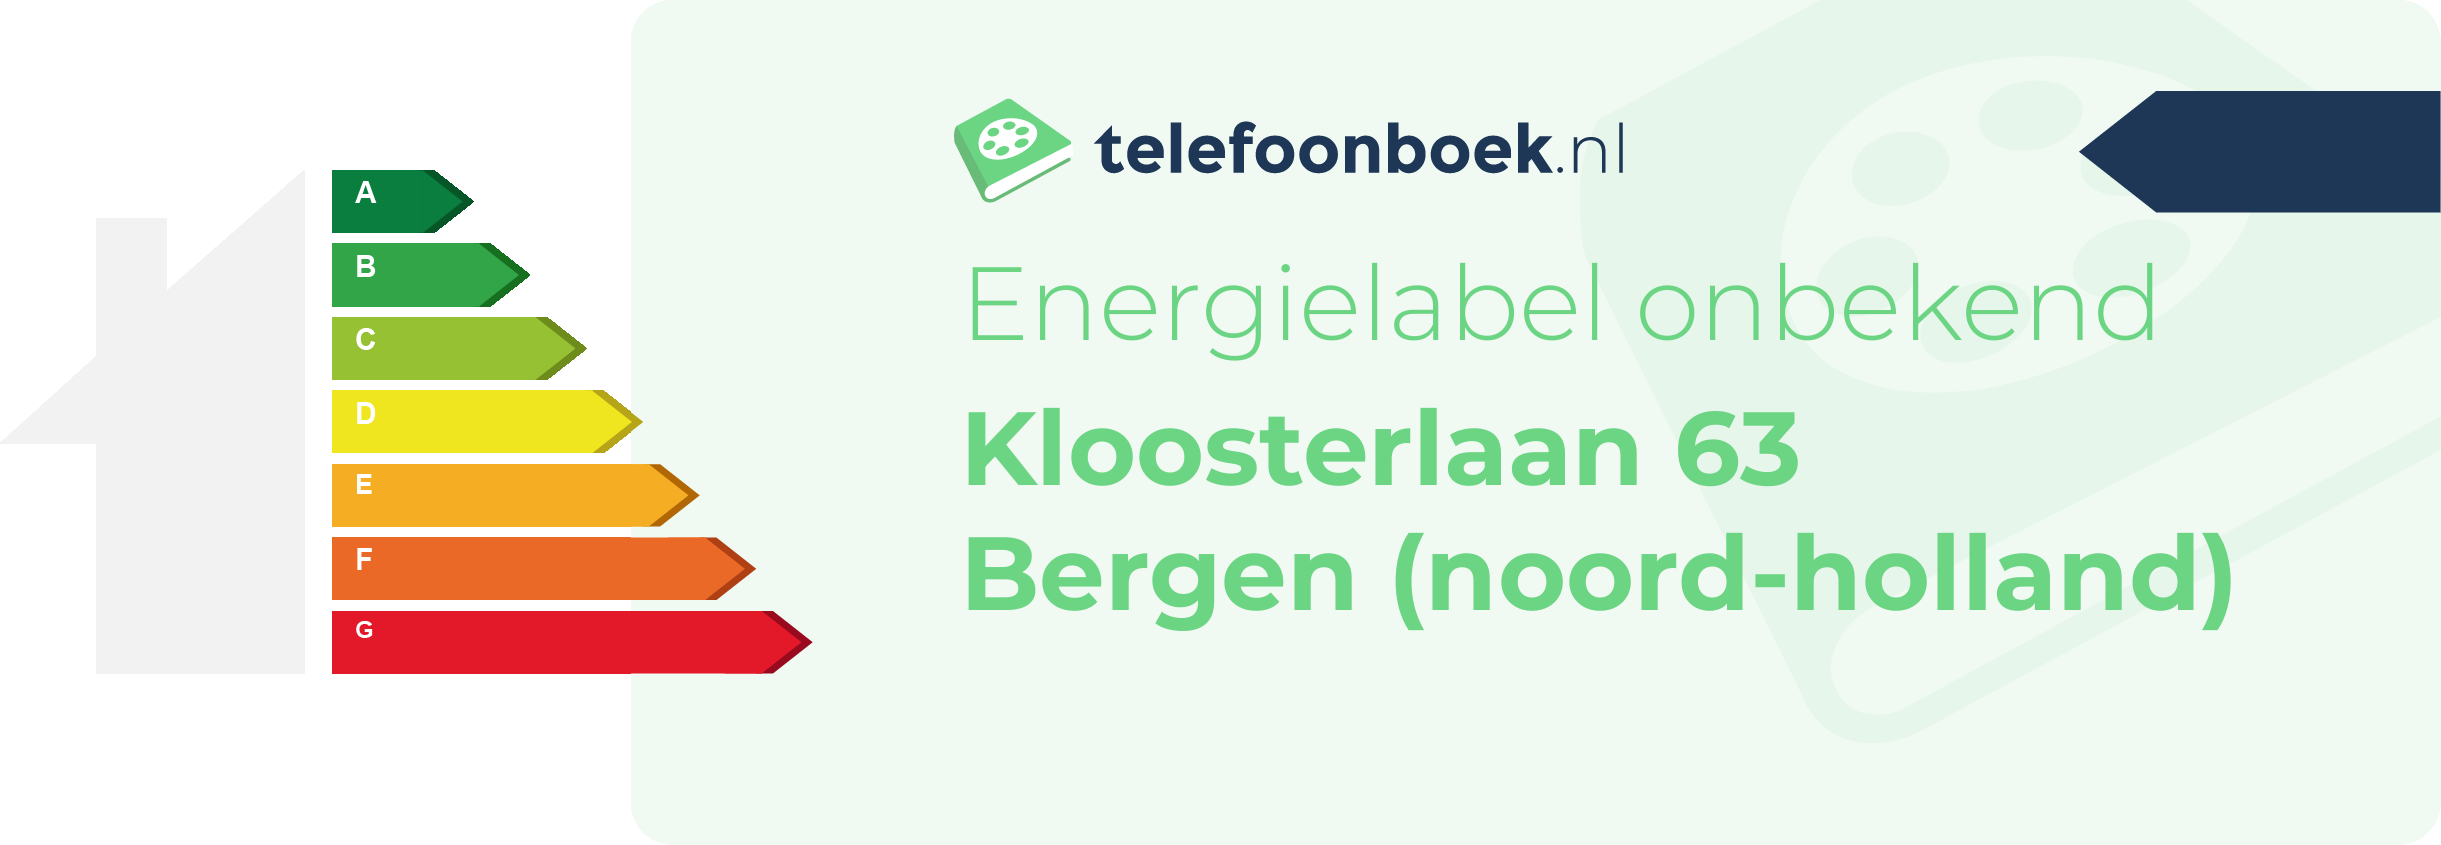 Energielabel Kloosterlaan 63 Bergen (Noord-Holland)